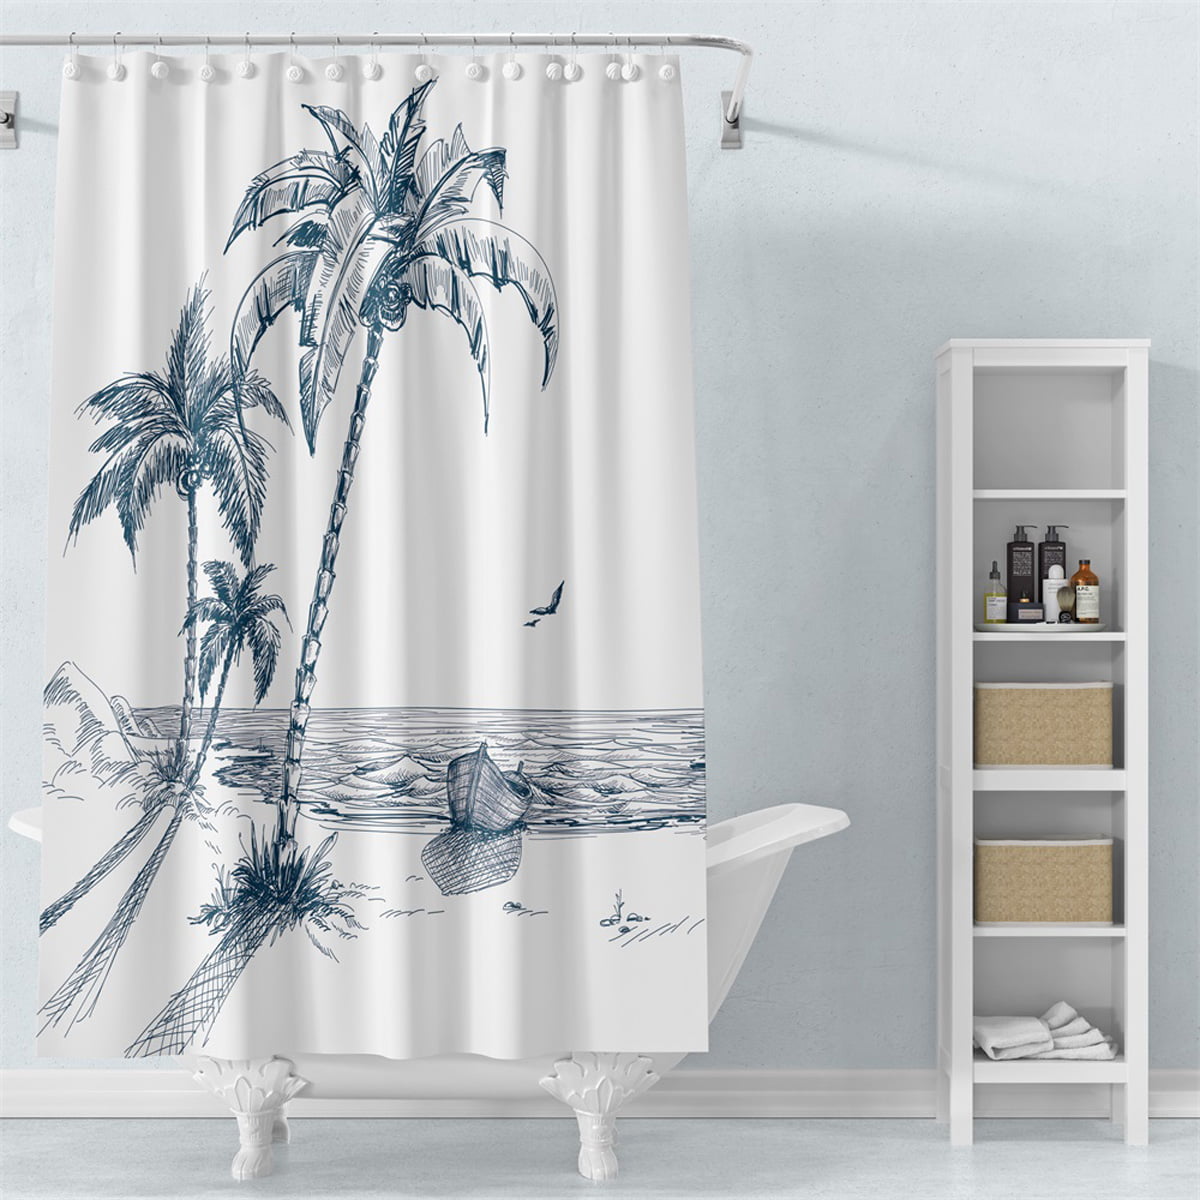 4 Pcs Unicorn Bathroom Rug Shower Curtain Skidproof Toilet Lid Cover Bath mat 